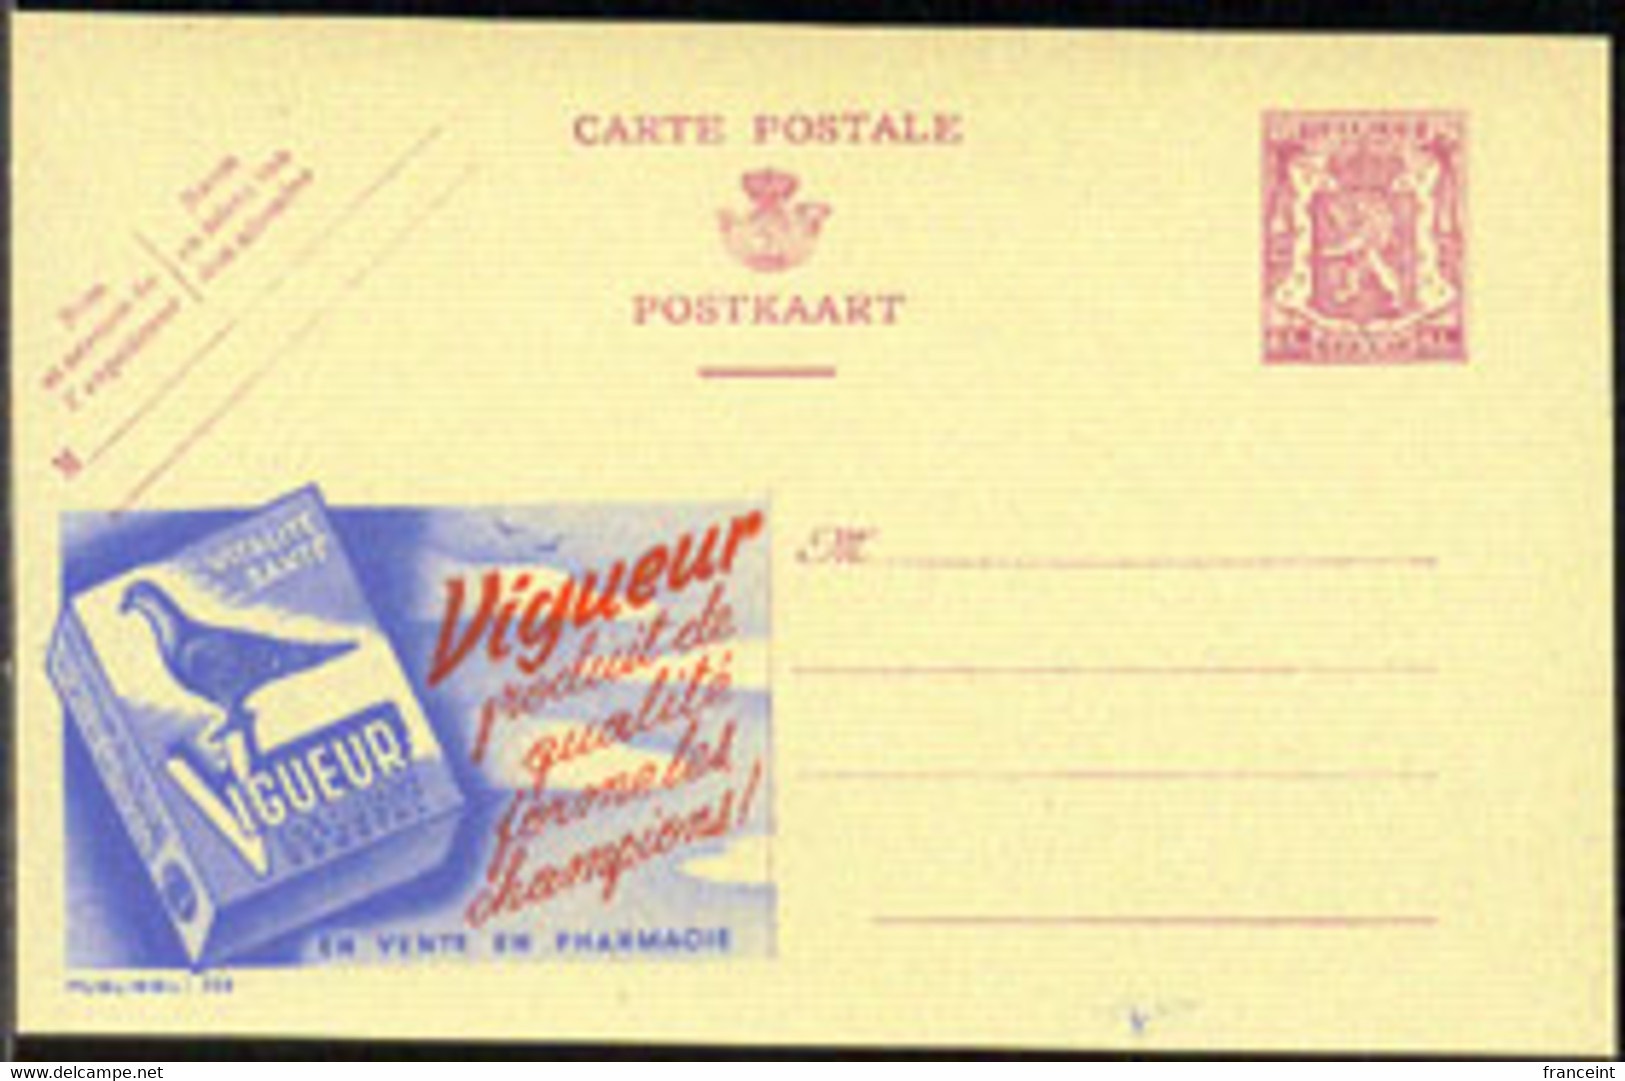 BELGIUM(1948) Box Of Medicine. Pigeon. 65 Centimes Bicolor Postal Card With Advertising Publibel No 733: "Vigueur." - Publibels